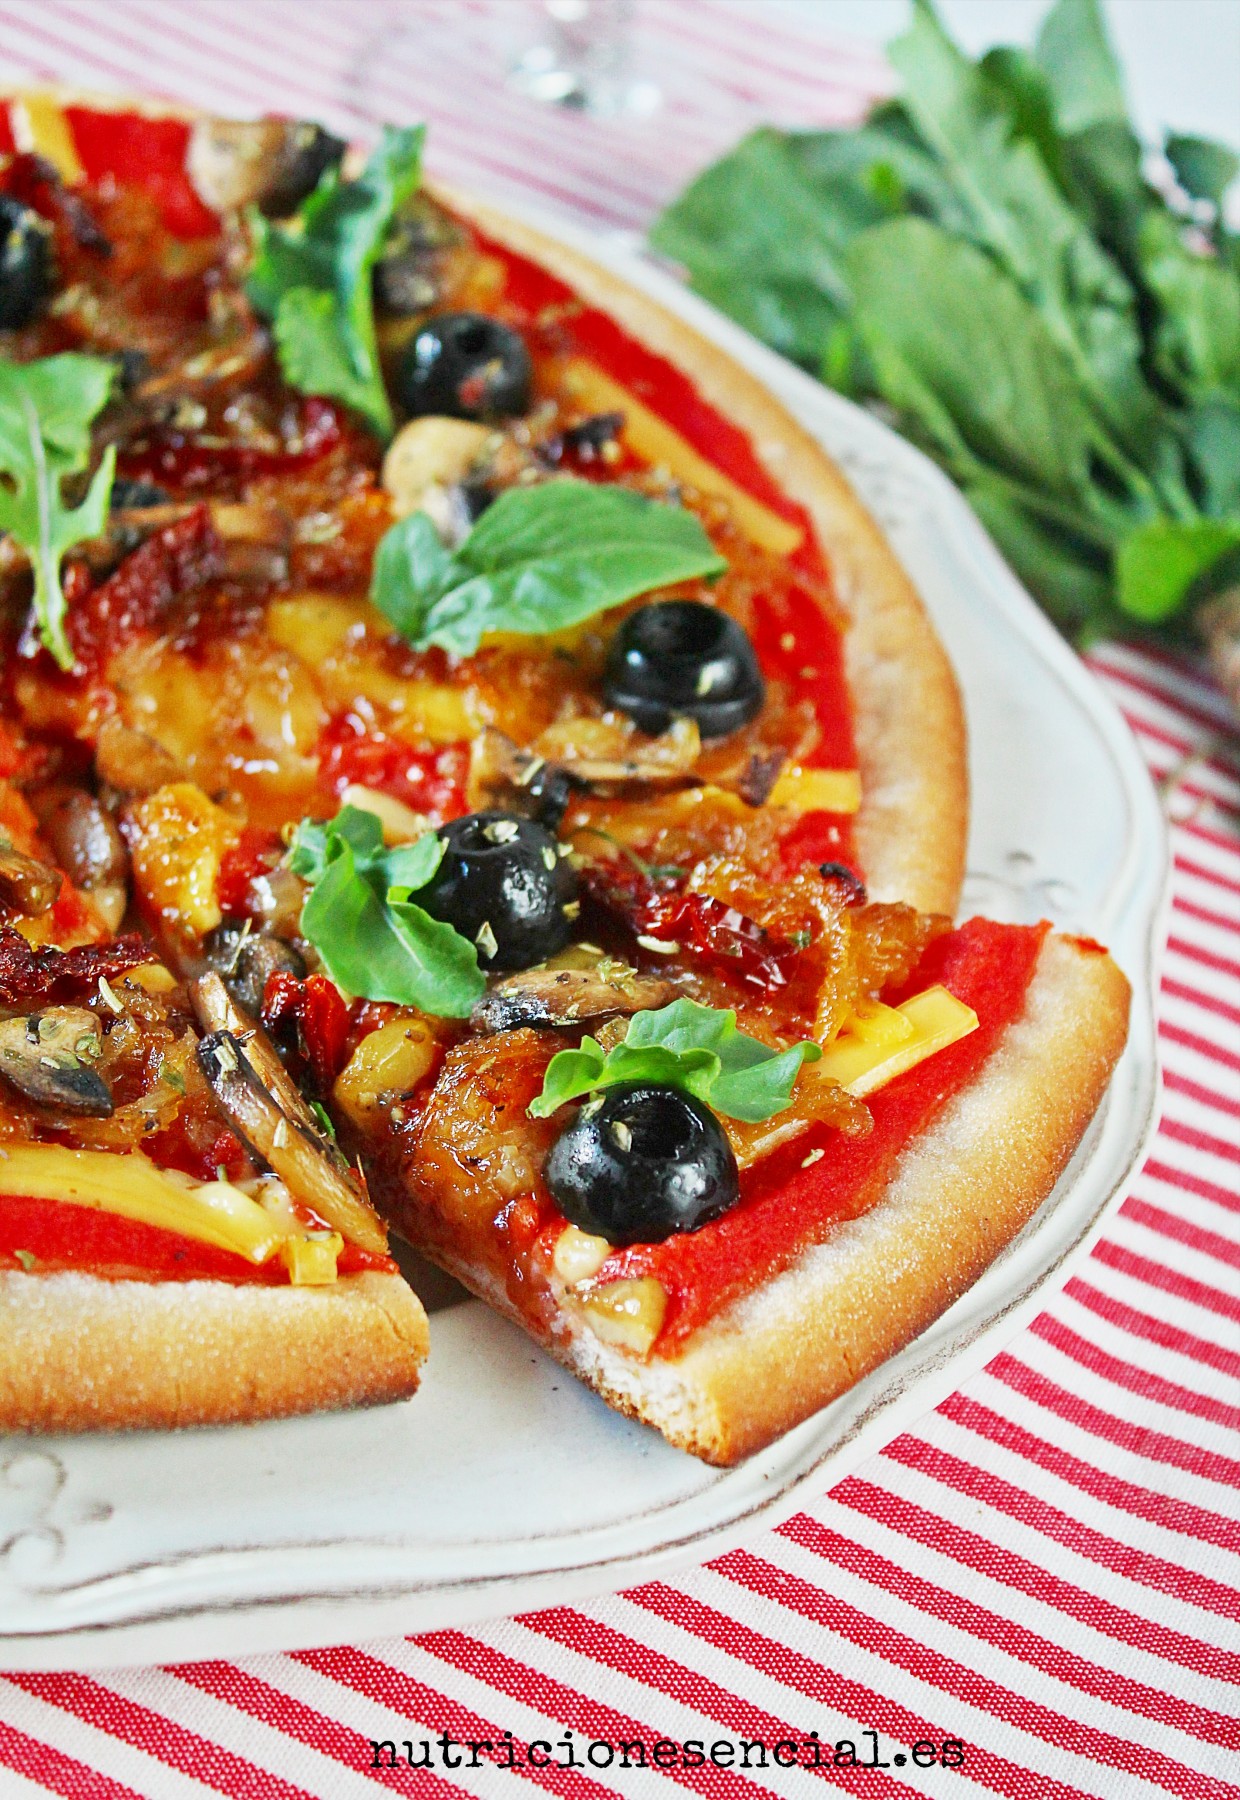 https://www.nutricionesencial.es/wp-content/uploads/2015/10/pizza-sin-gluten2.jpg